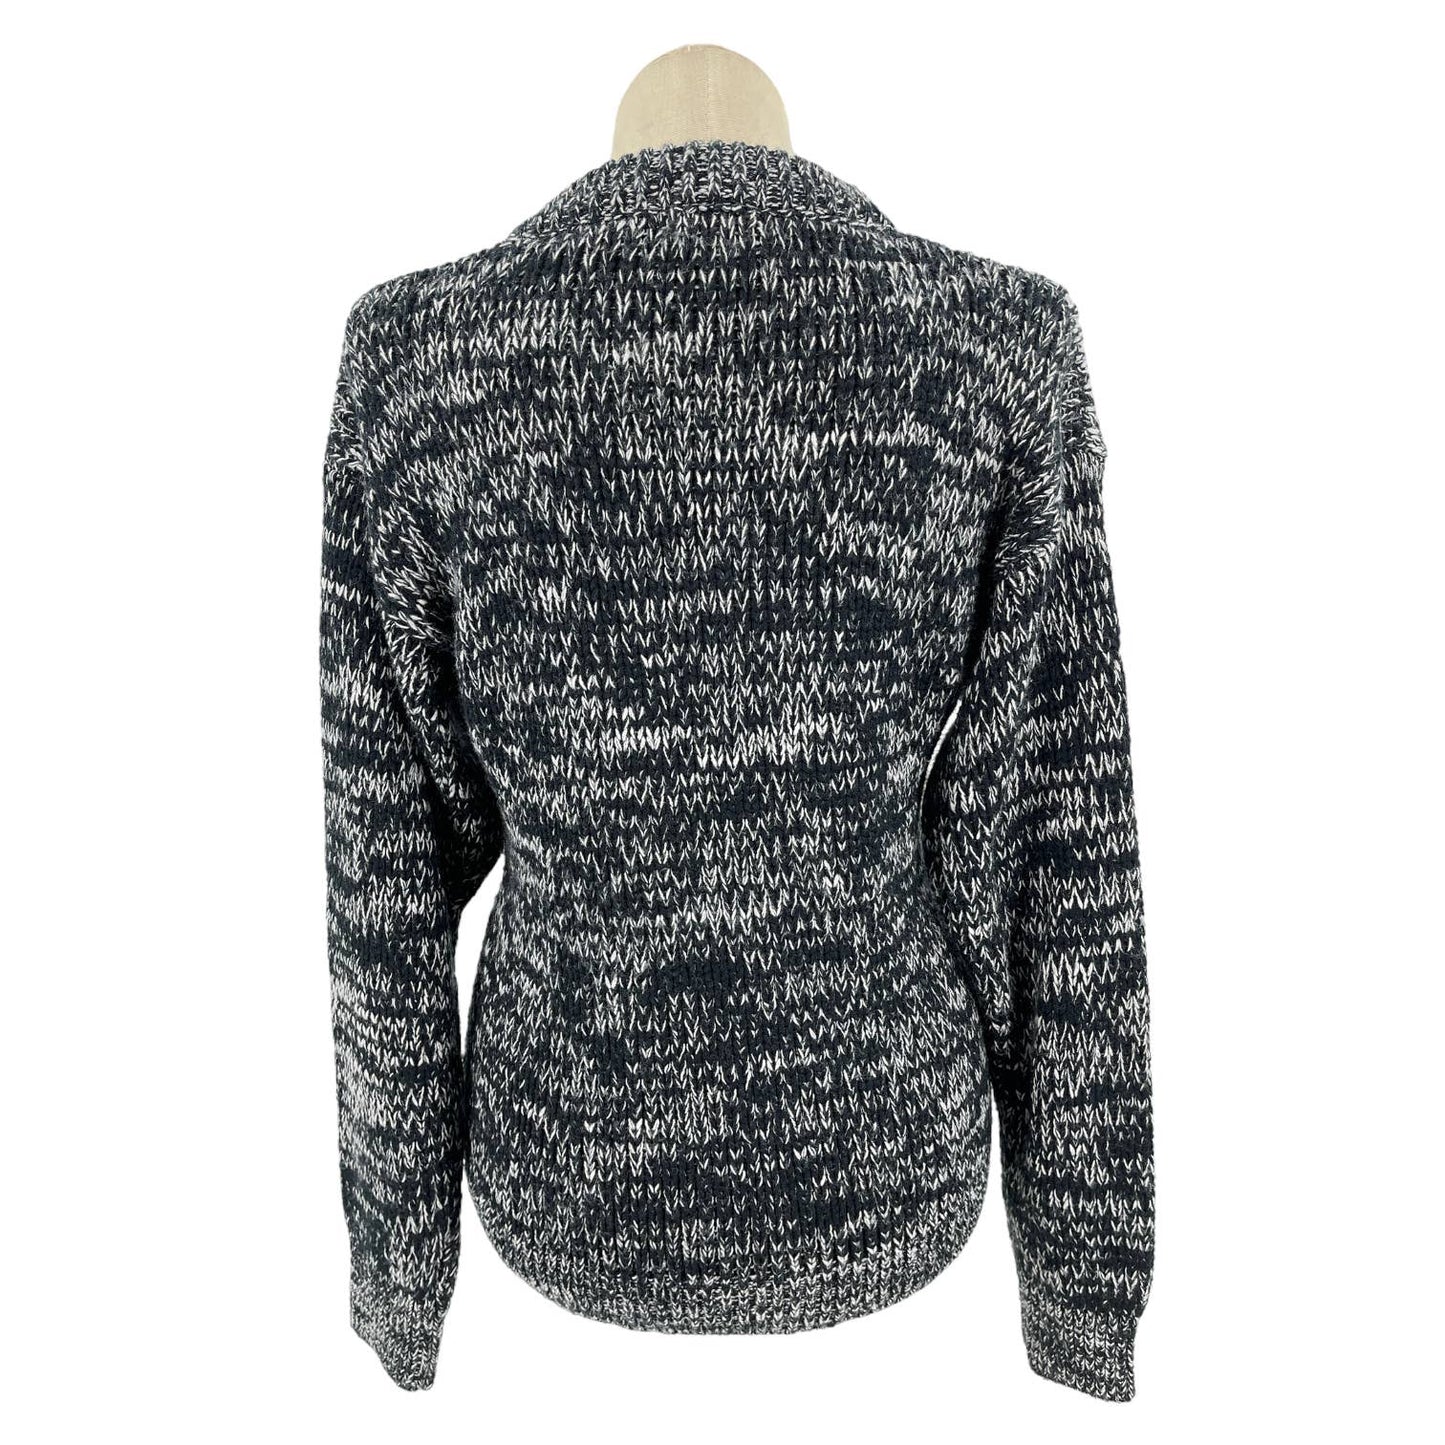 Vintage 90s Black and White Geometric Sweater Pullover LS Nicolas Allen Size M